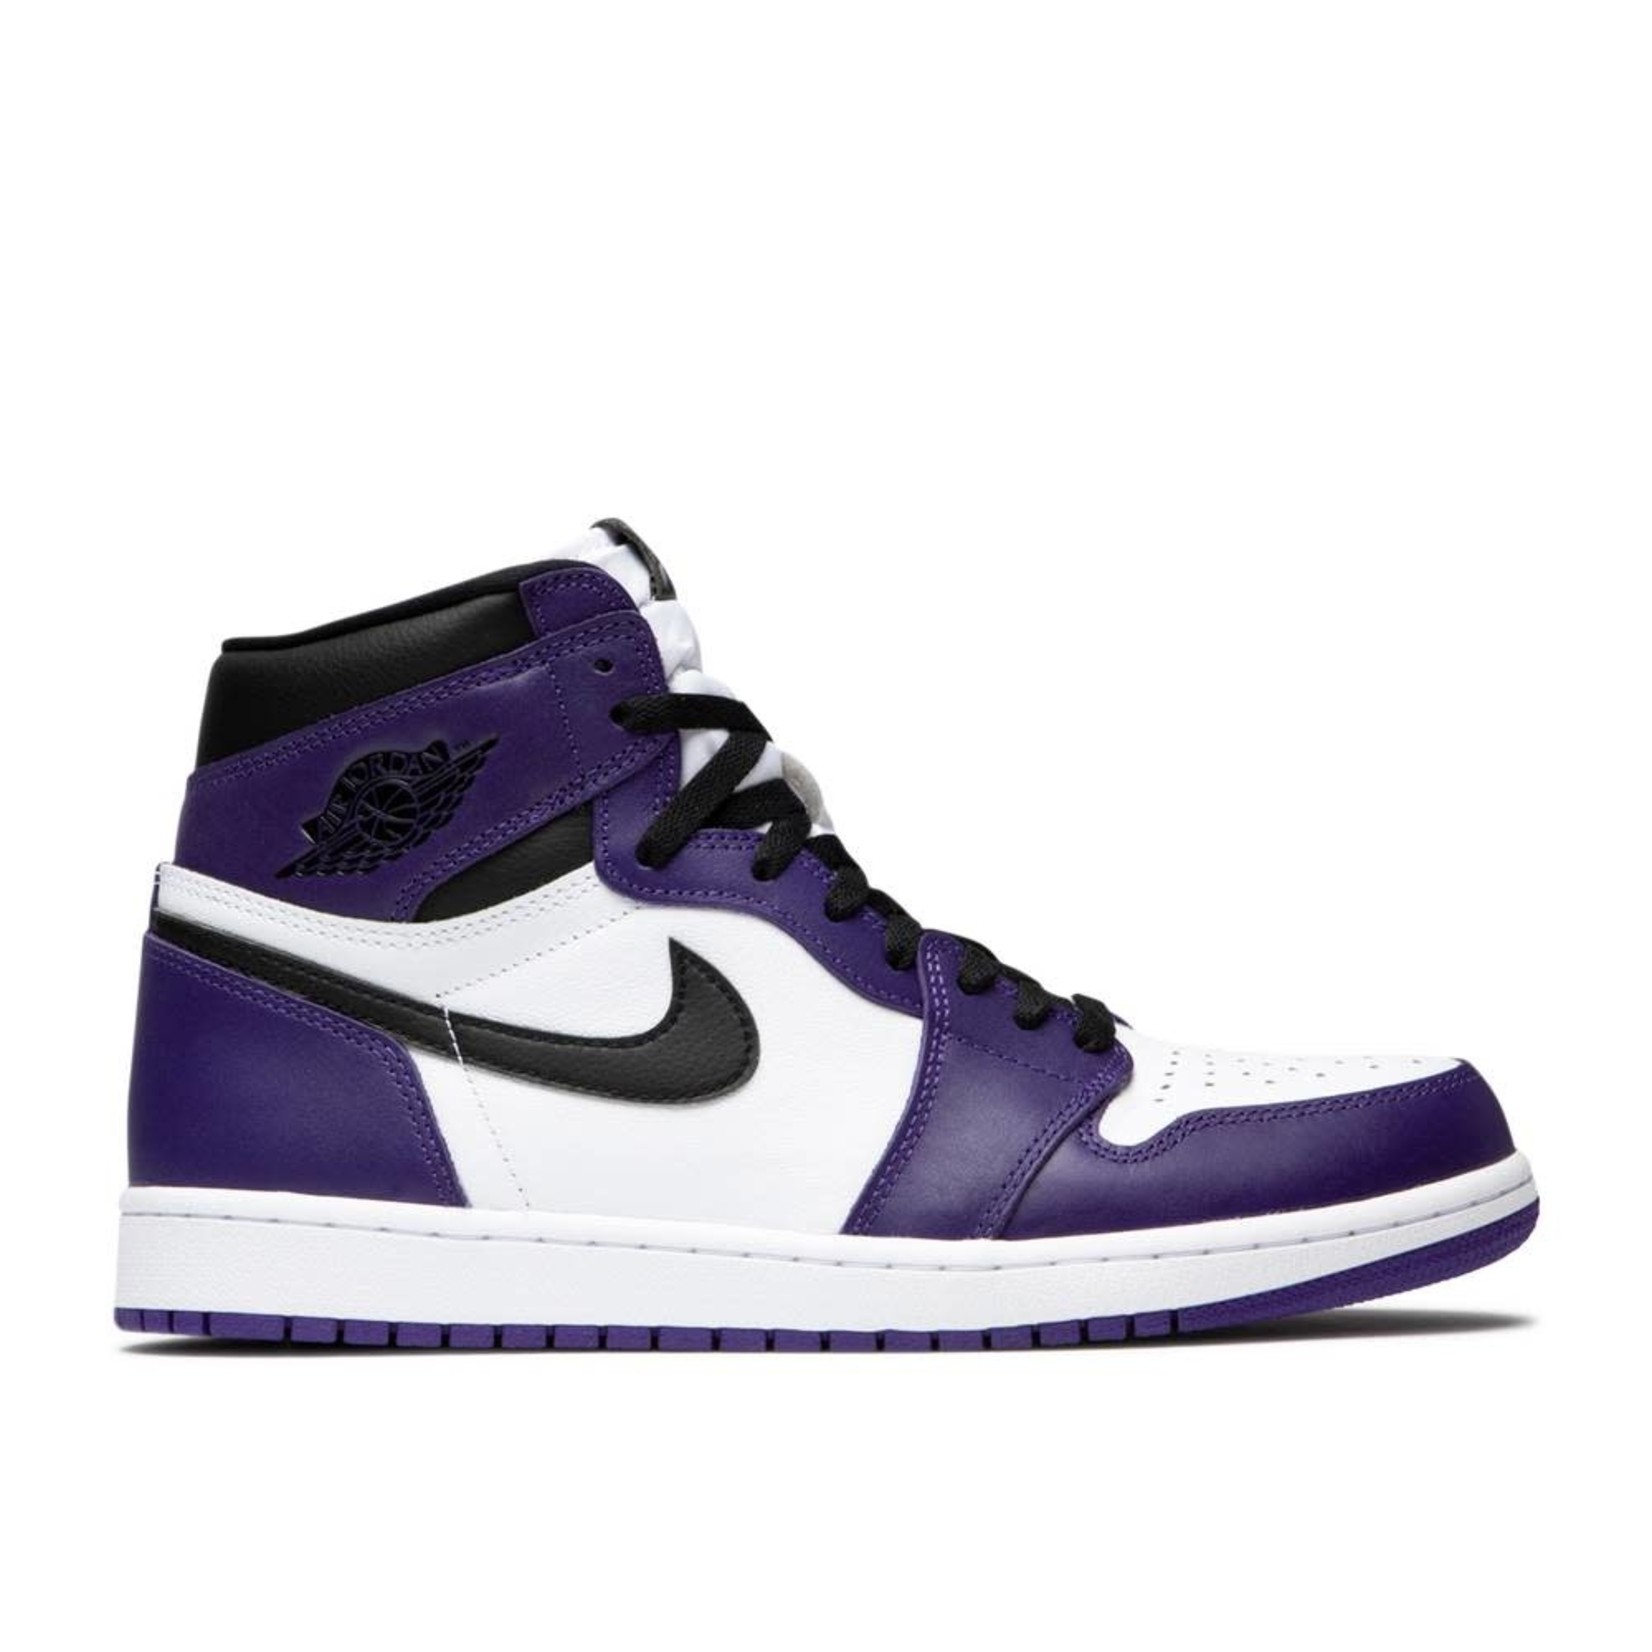 Jordan Jordan 1 Retro High Court Purple White Size 10, DS BRAND NEW